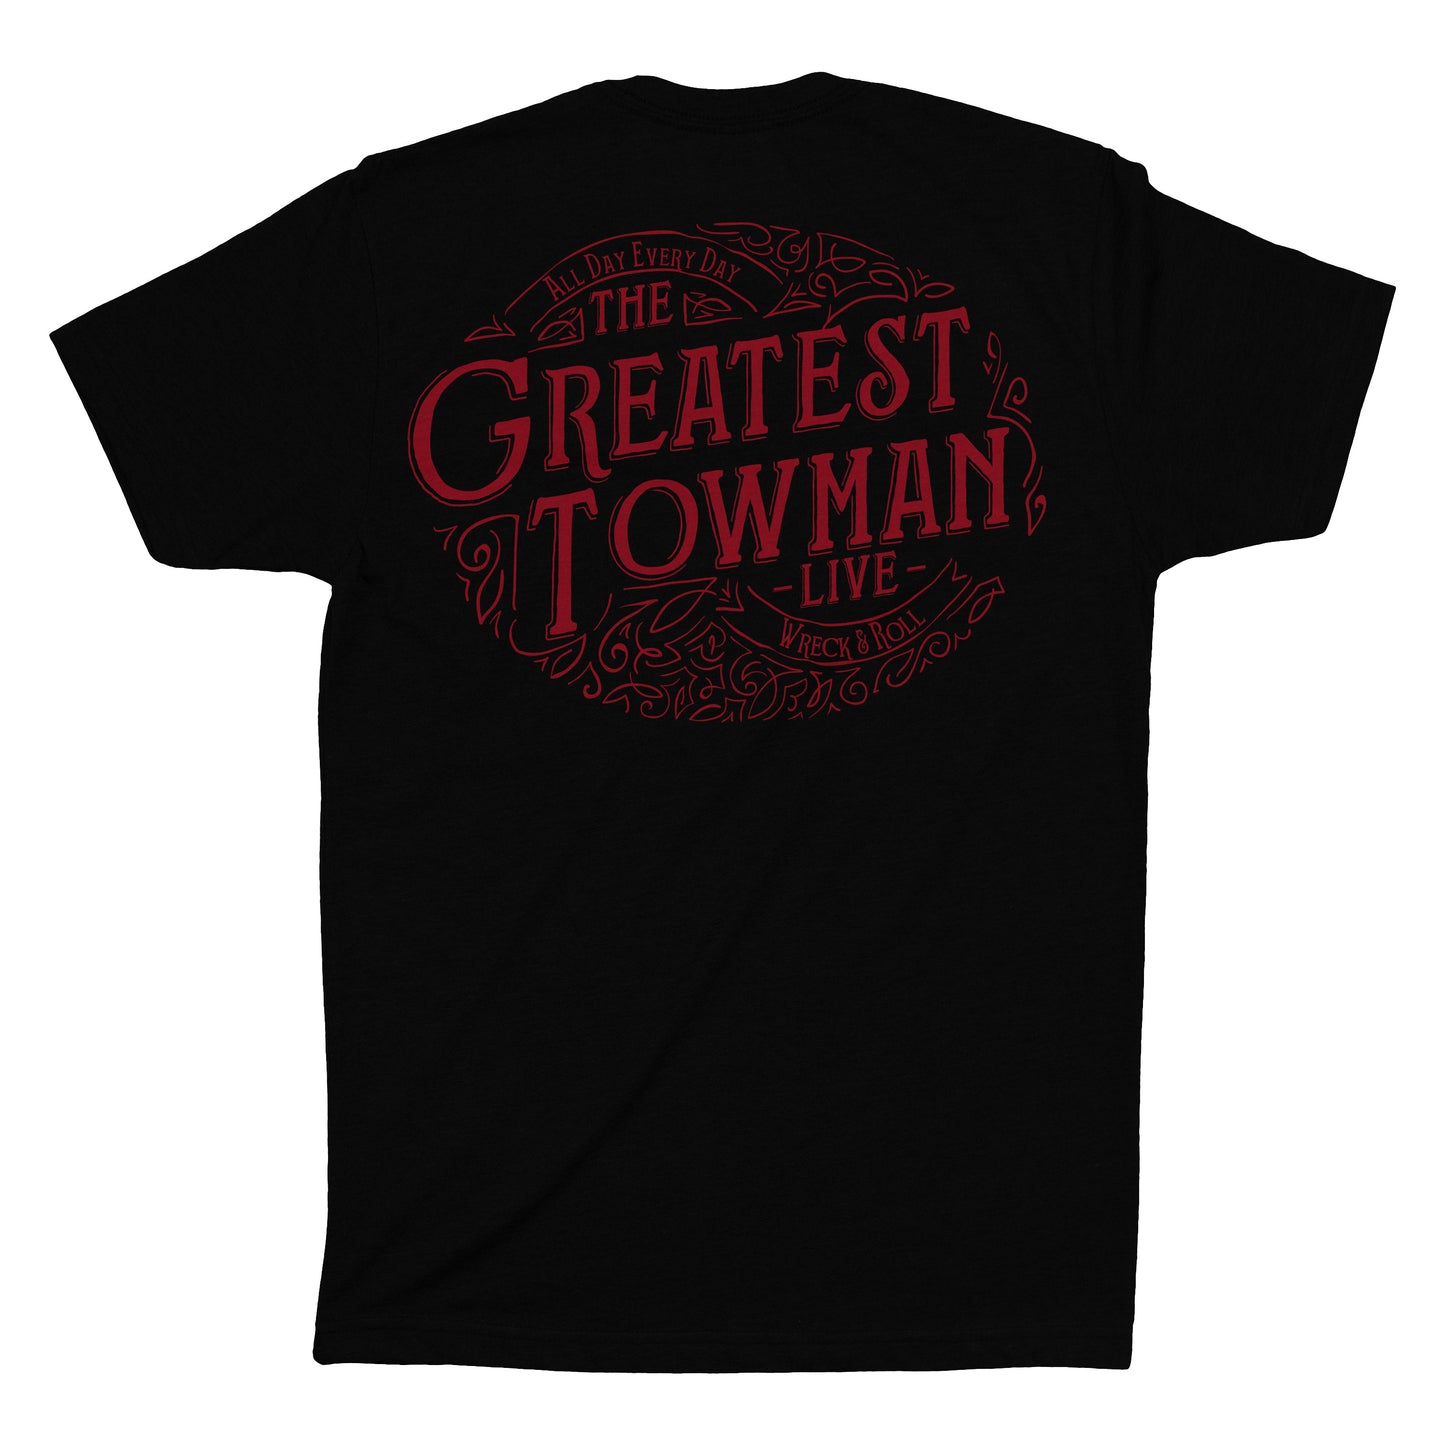 The Greatest Towman t-shirt